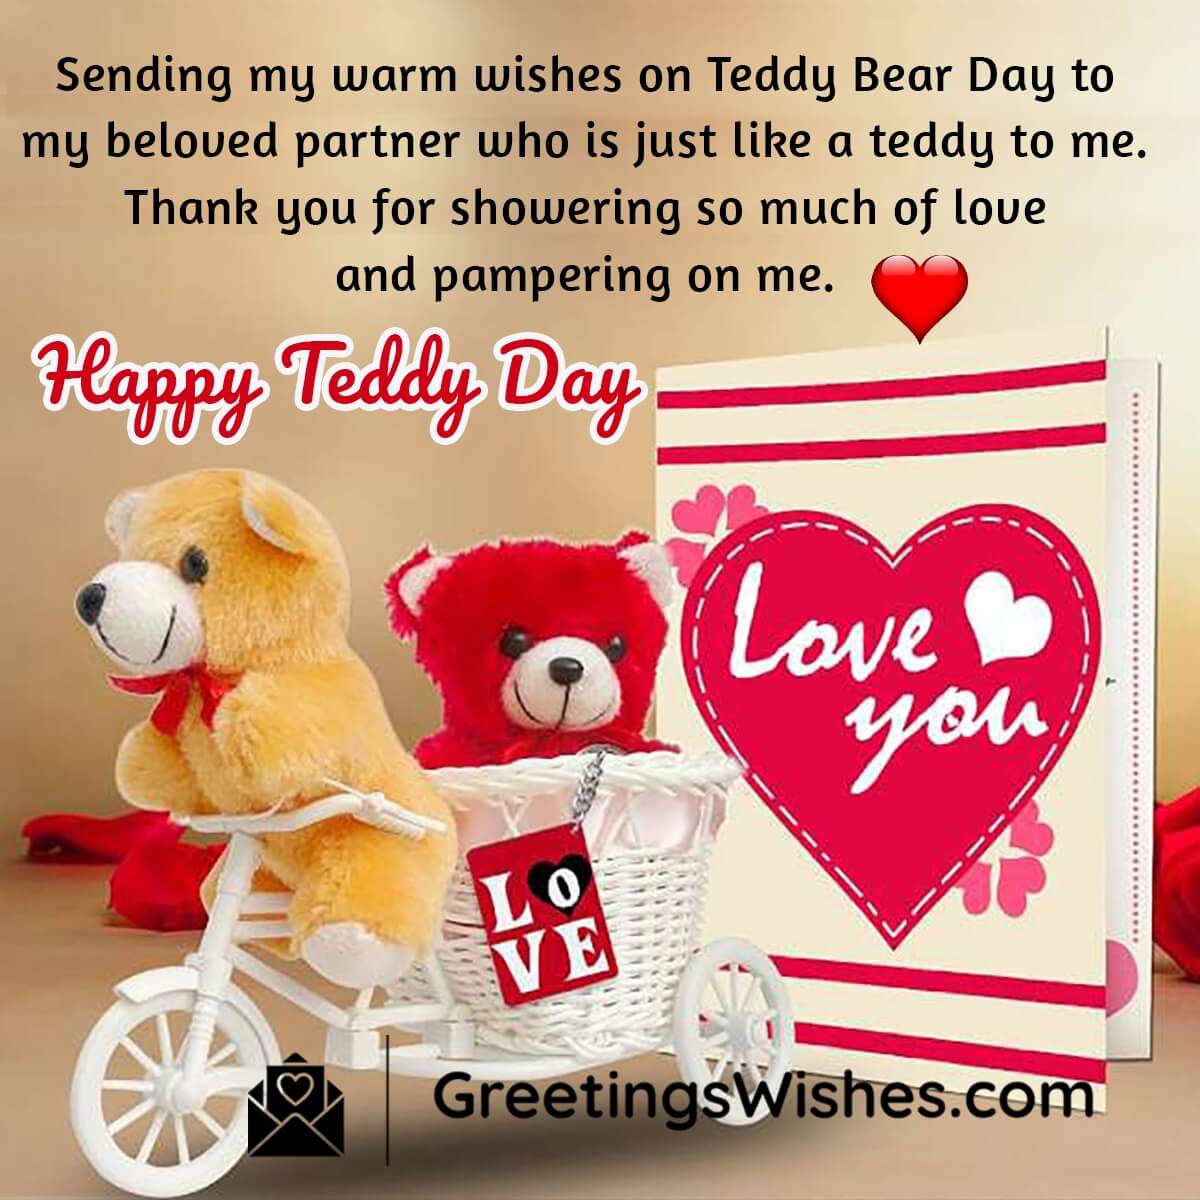 Happy Teddy Day Wish For Partner